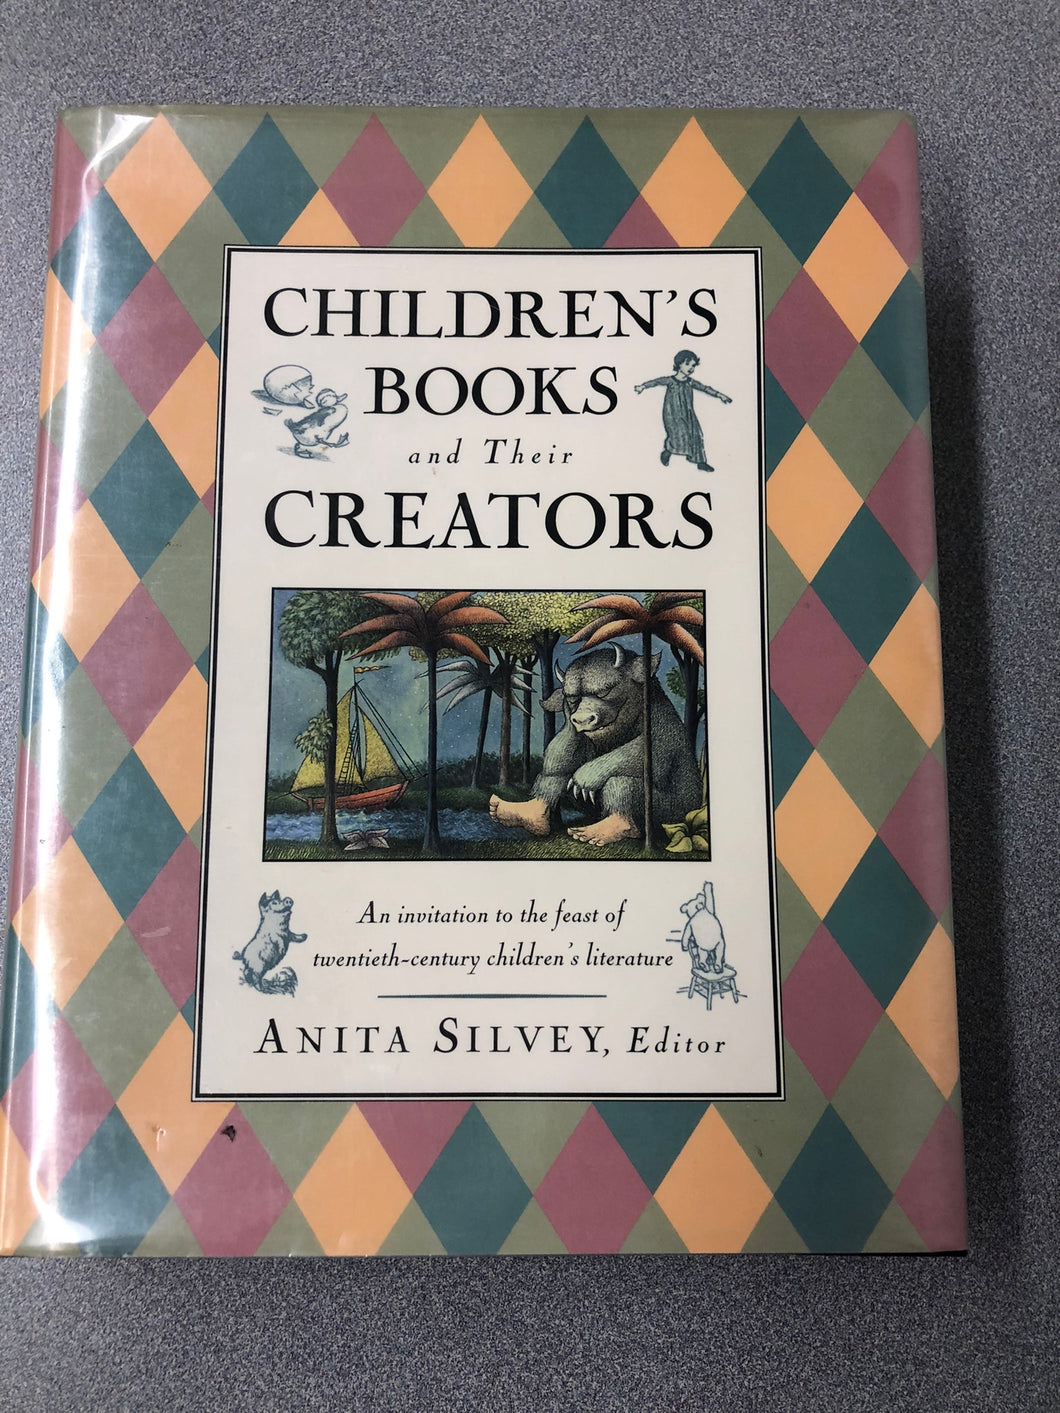 Children's Books and Their Creators: An Invitation to the Feast of Twentieth-Century Children's Literature, Silvey, Anita, ed. [1995] EM 3/22